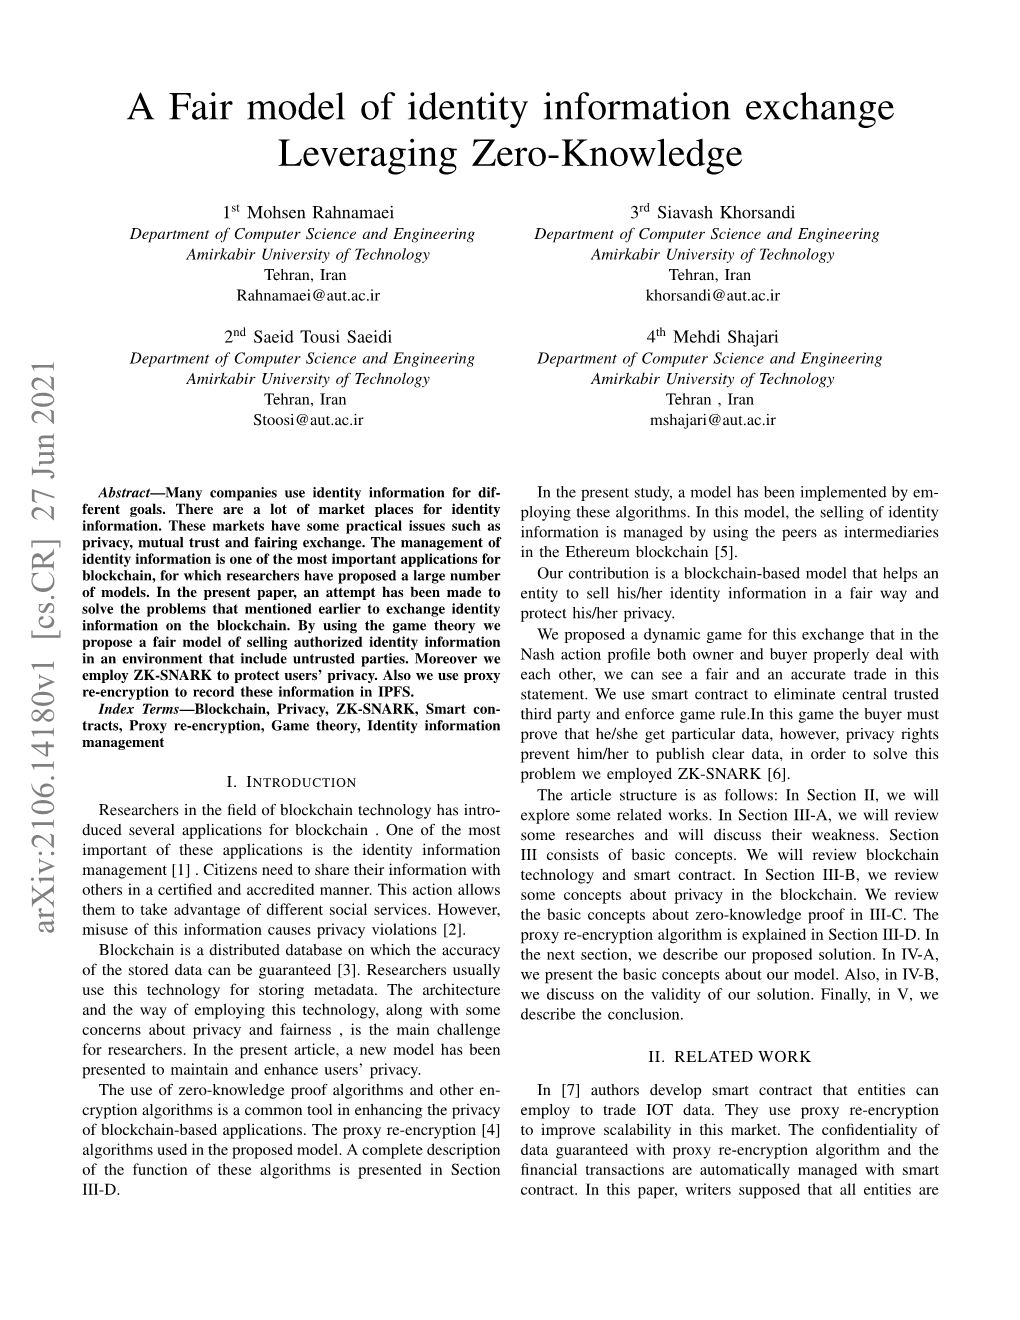 A Fair Model of Identity Information Exchange Leveraging Zero-Knowledge